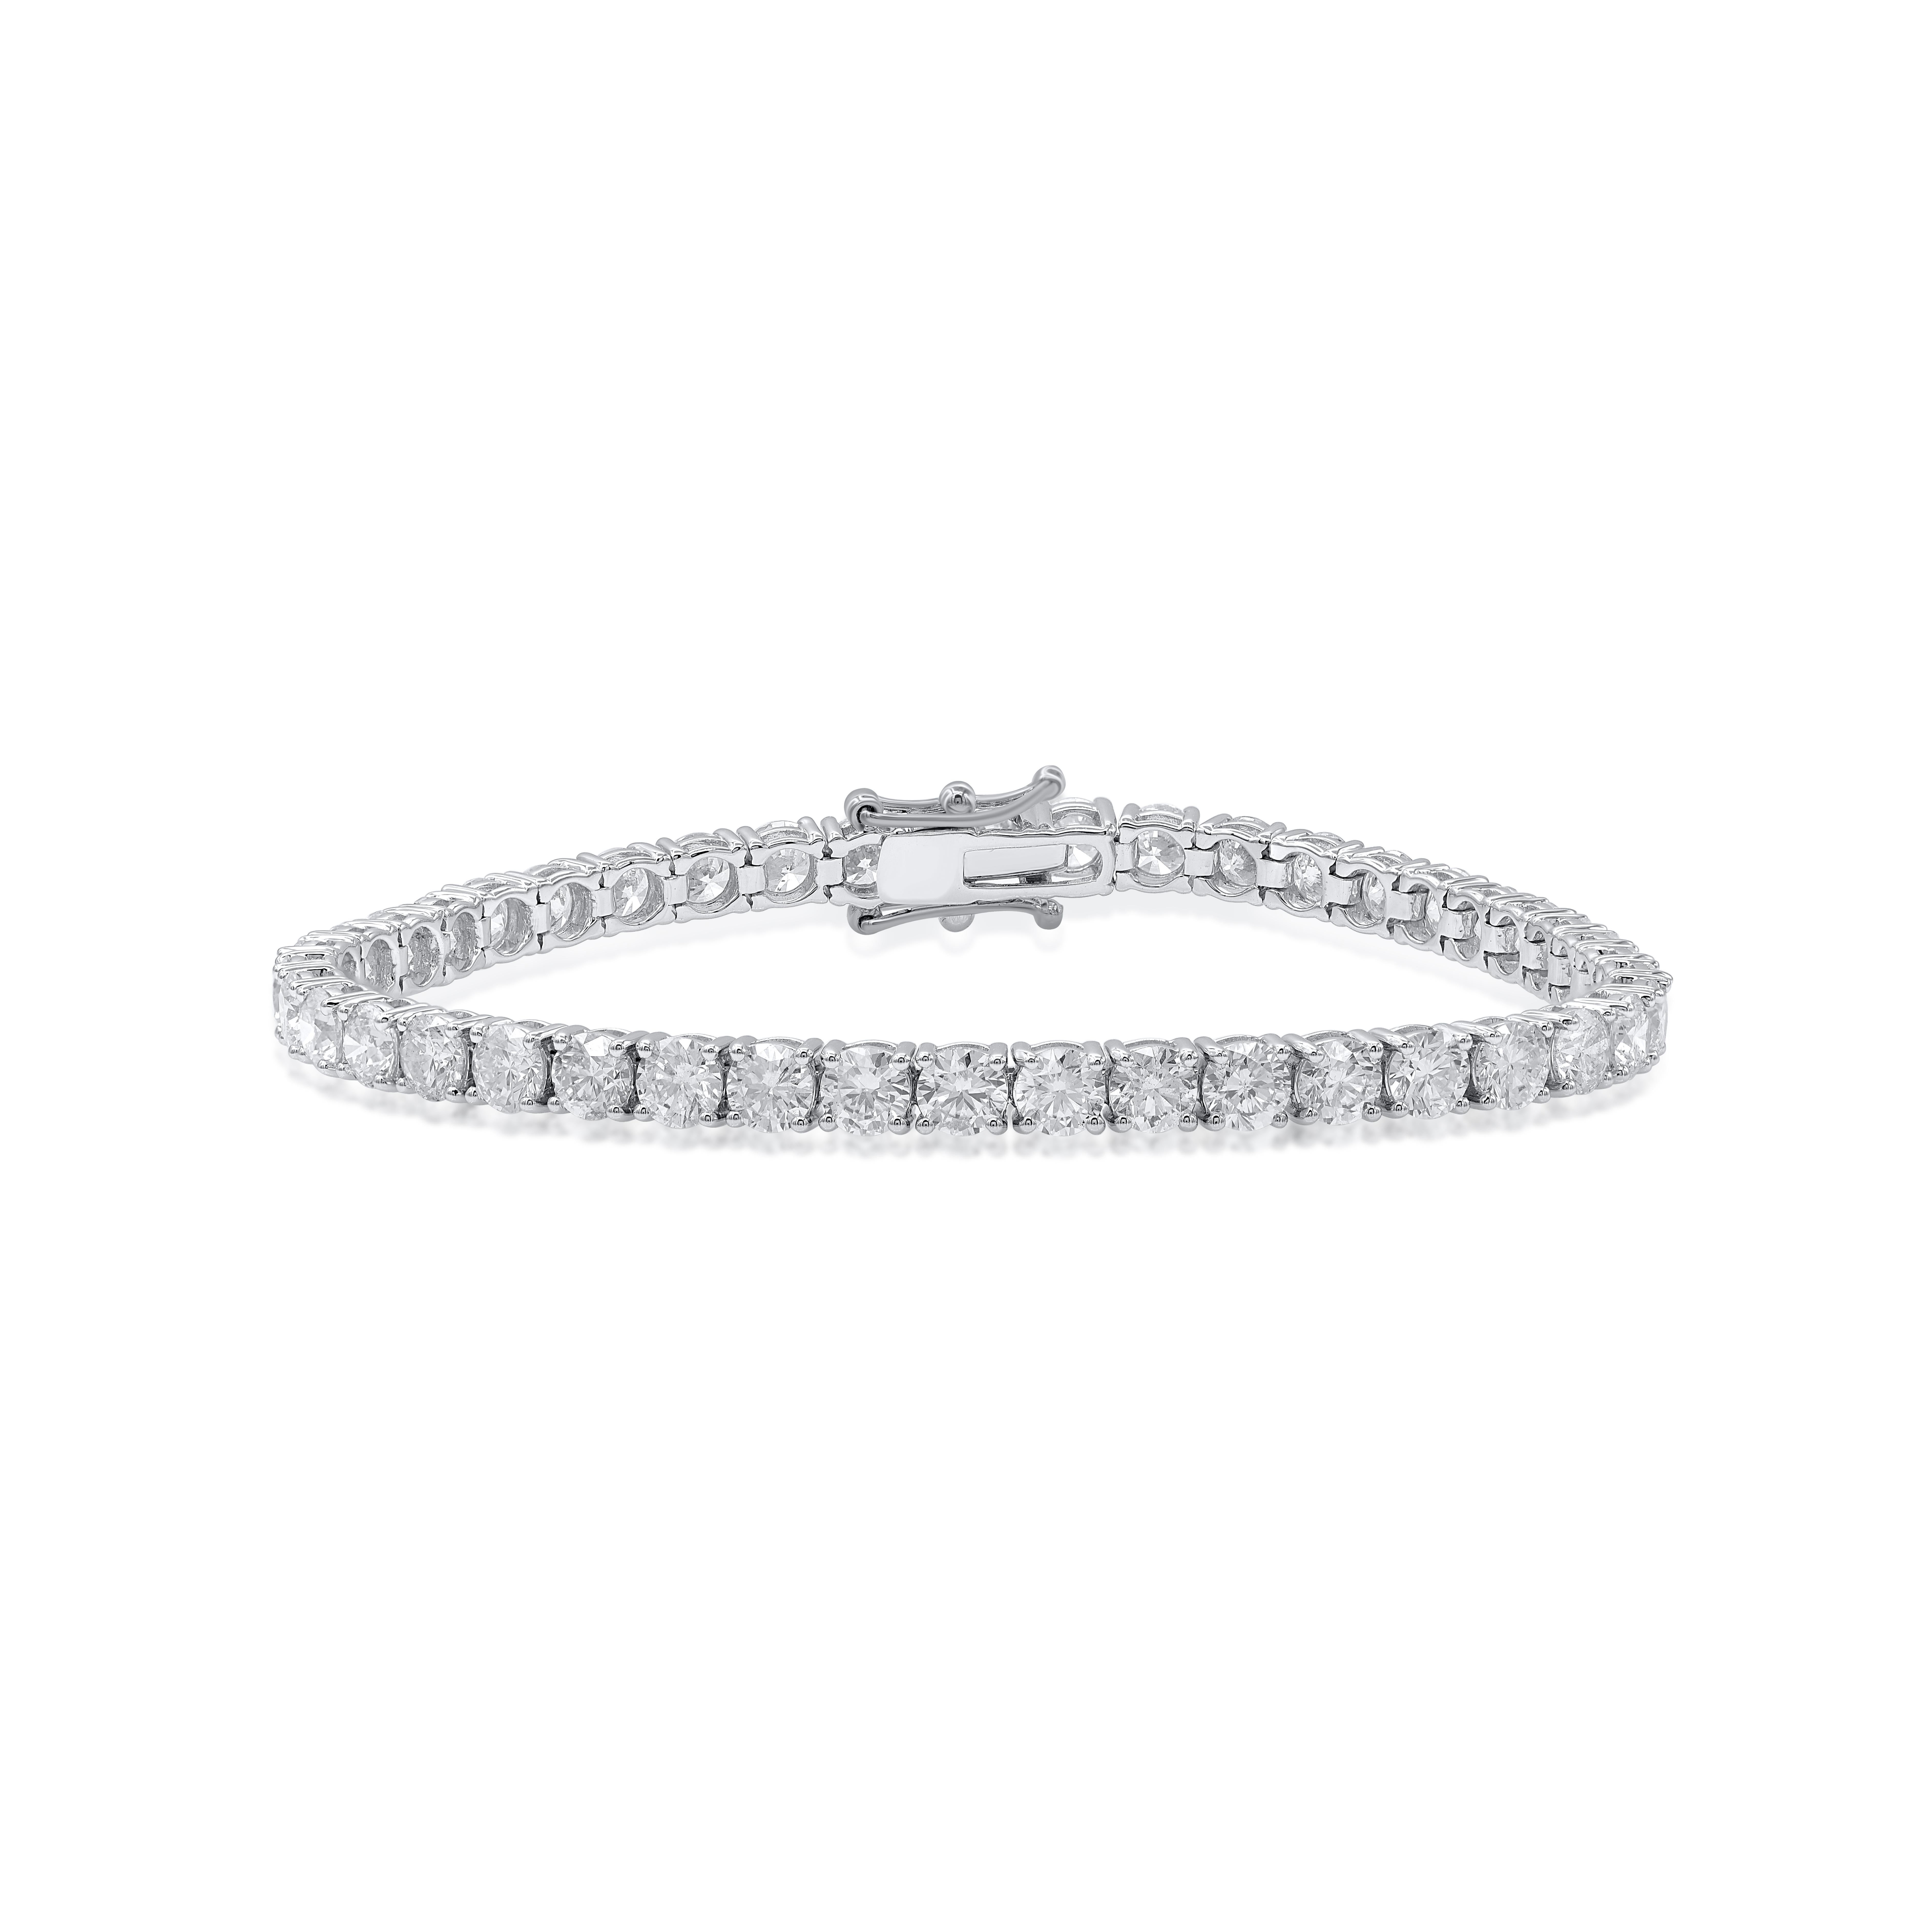 10 carat tennis bracelet